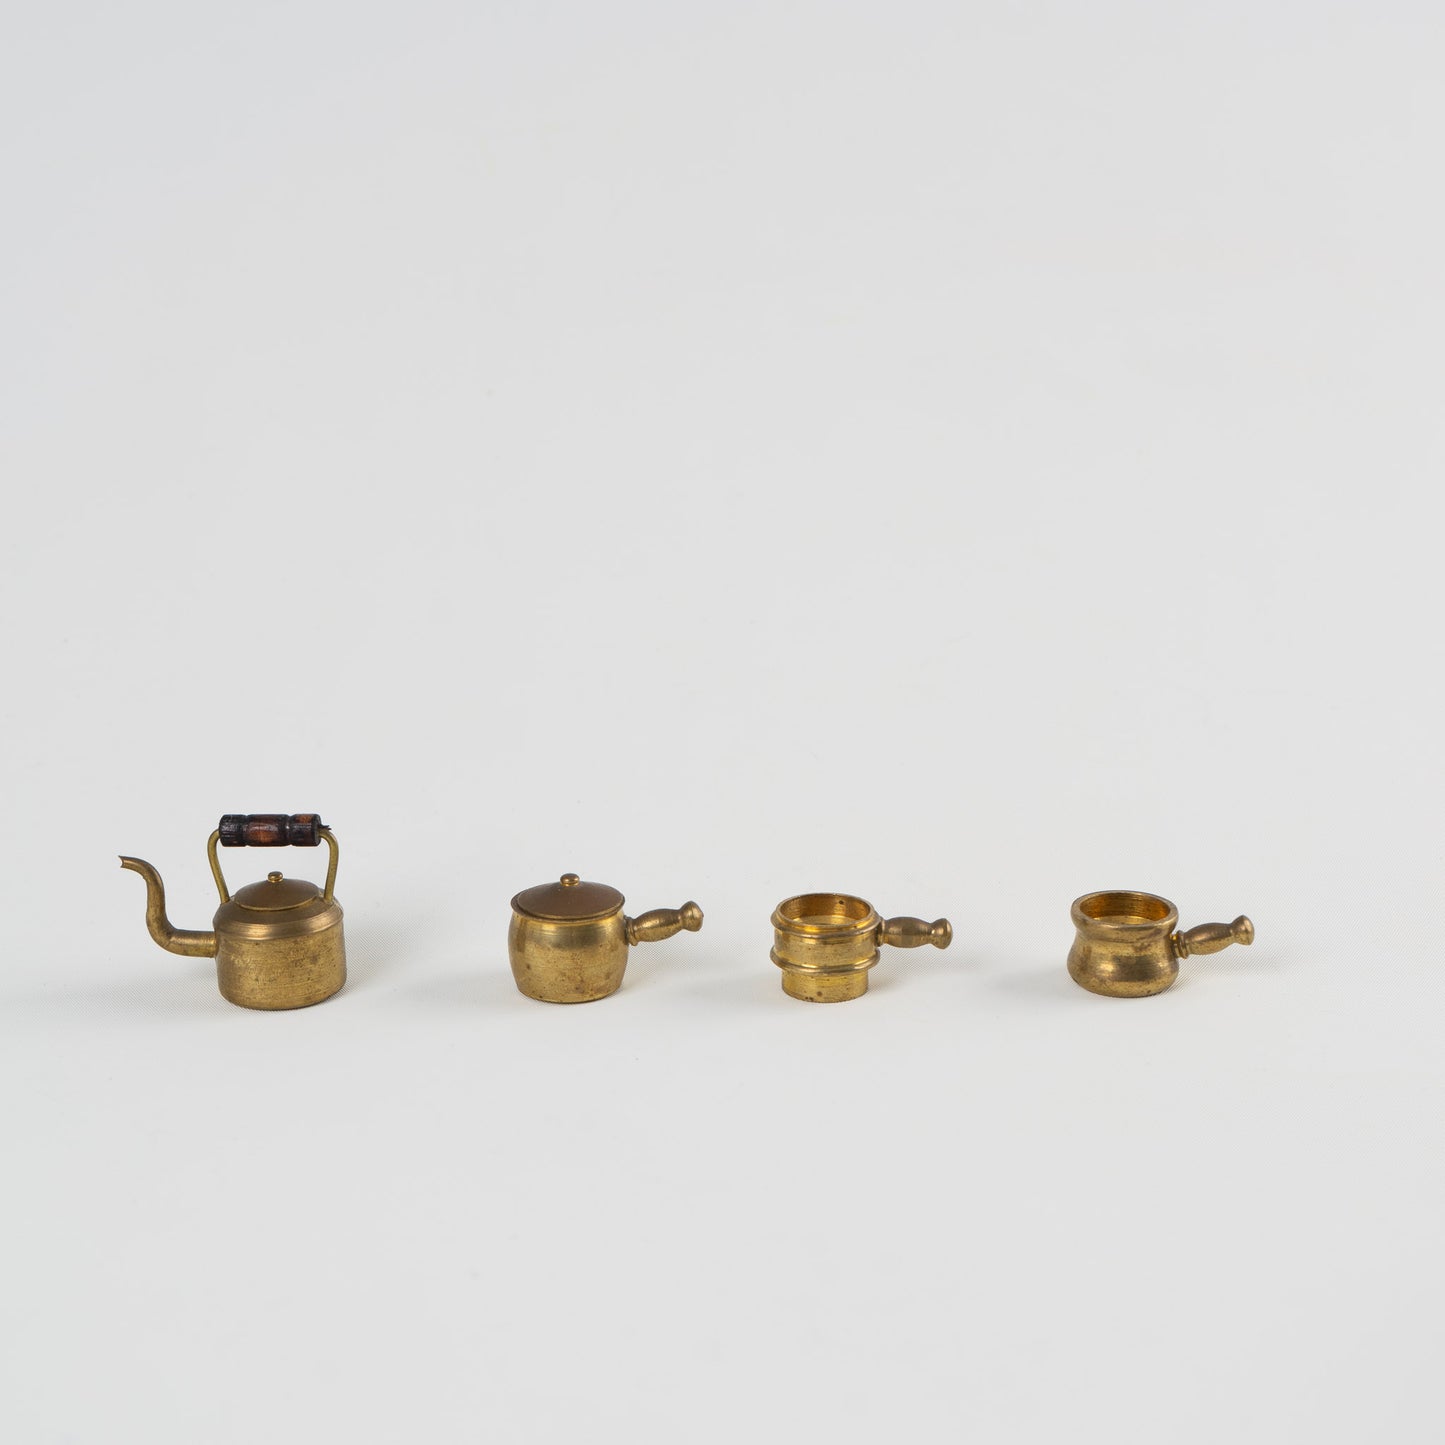 Vintage Brass Temptations Miniature Collection - Mini Brass Figurines